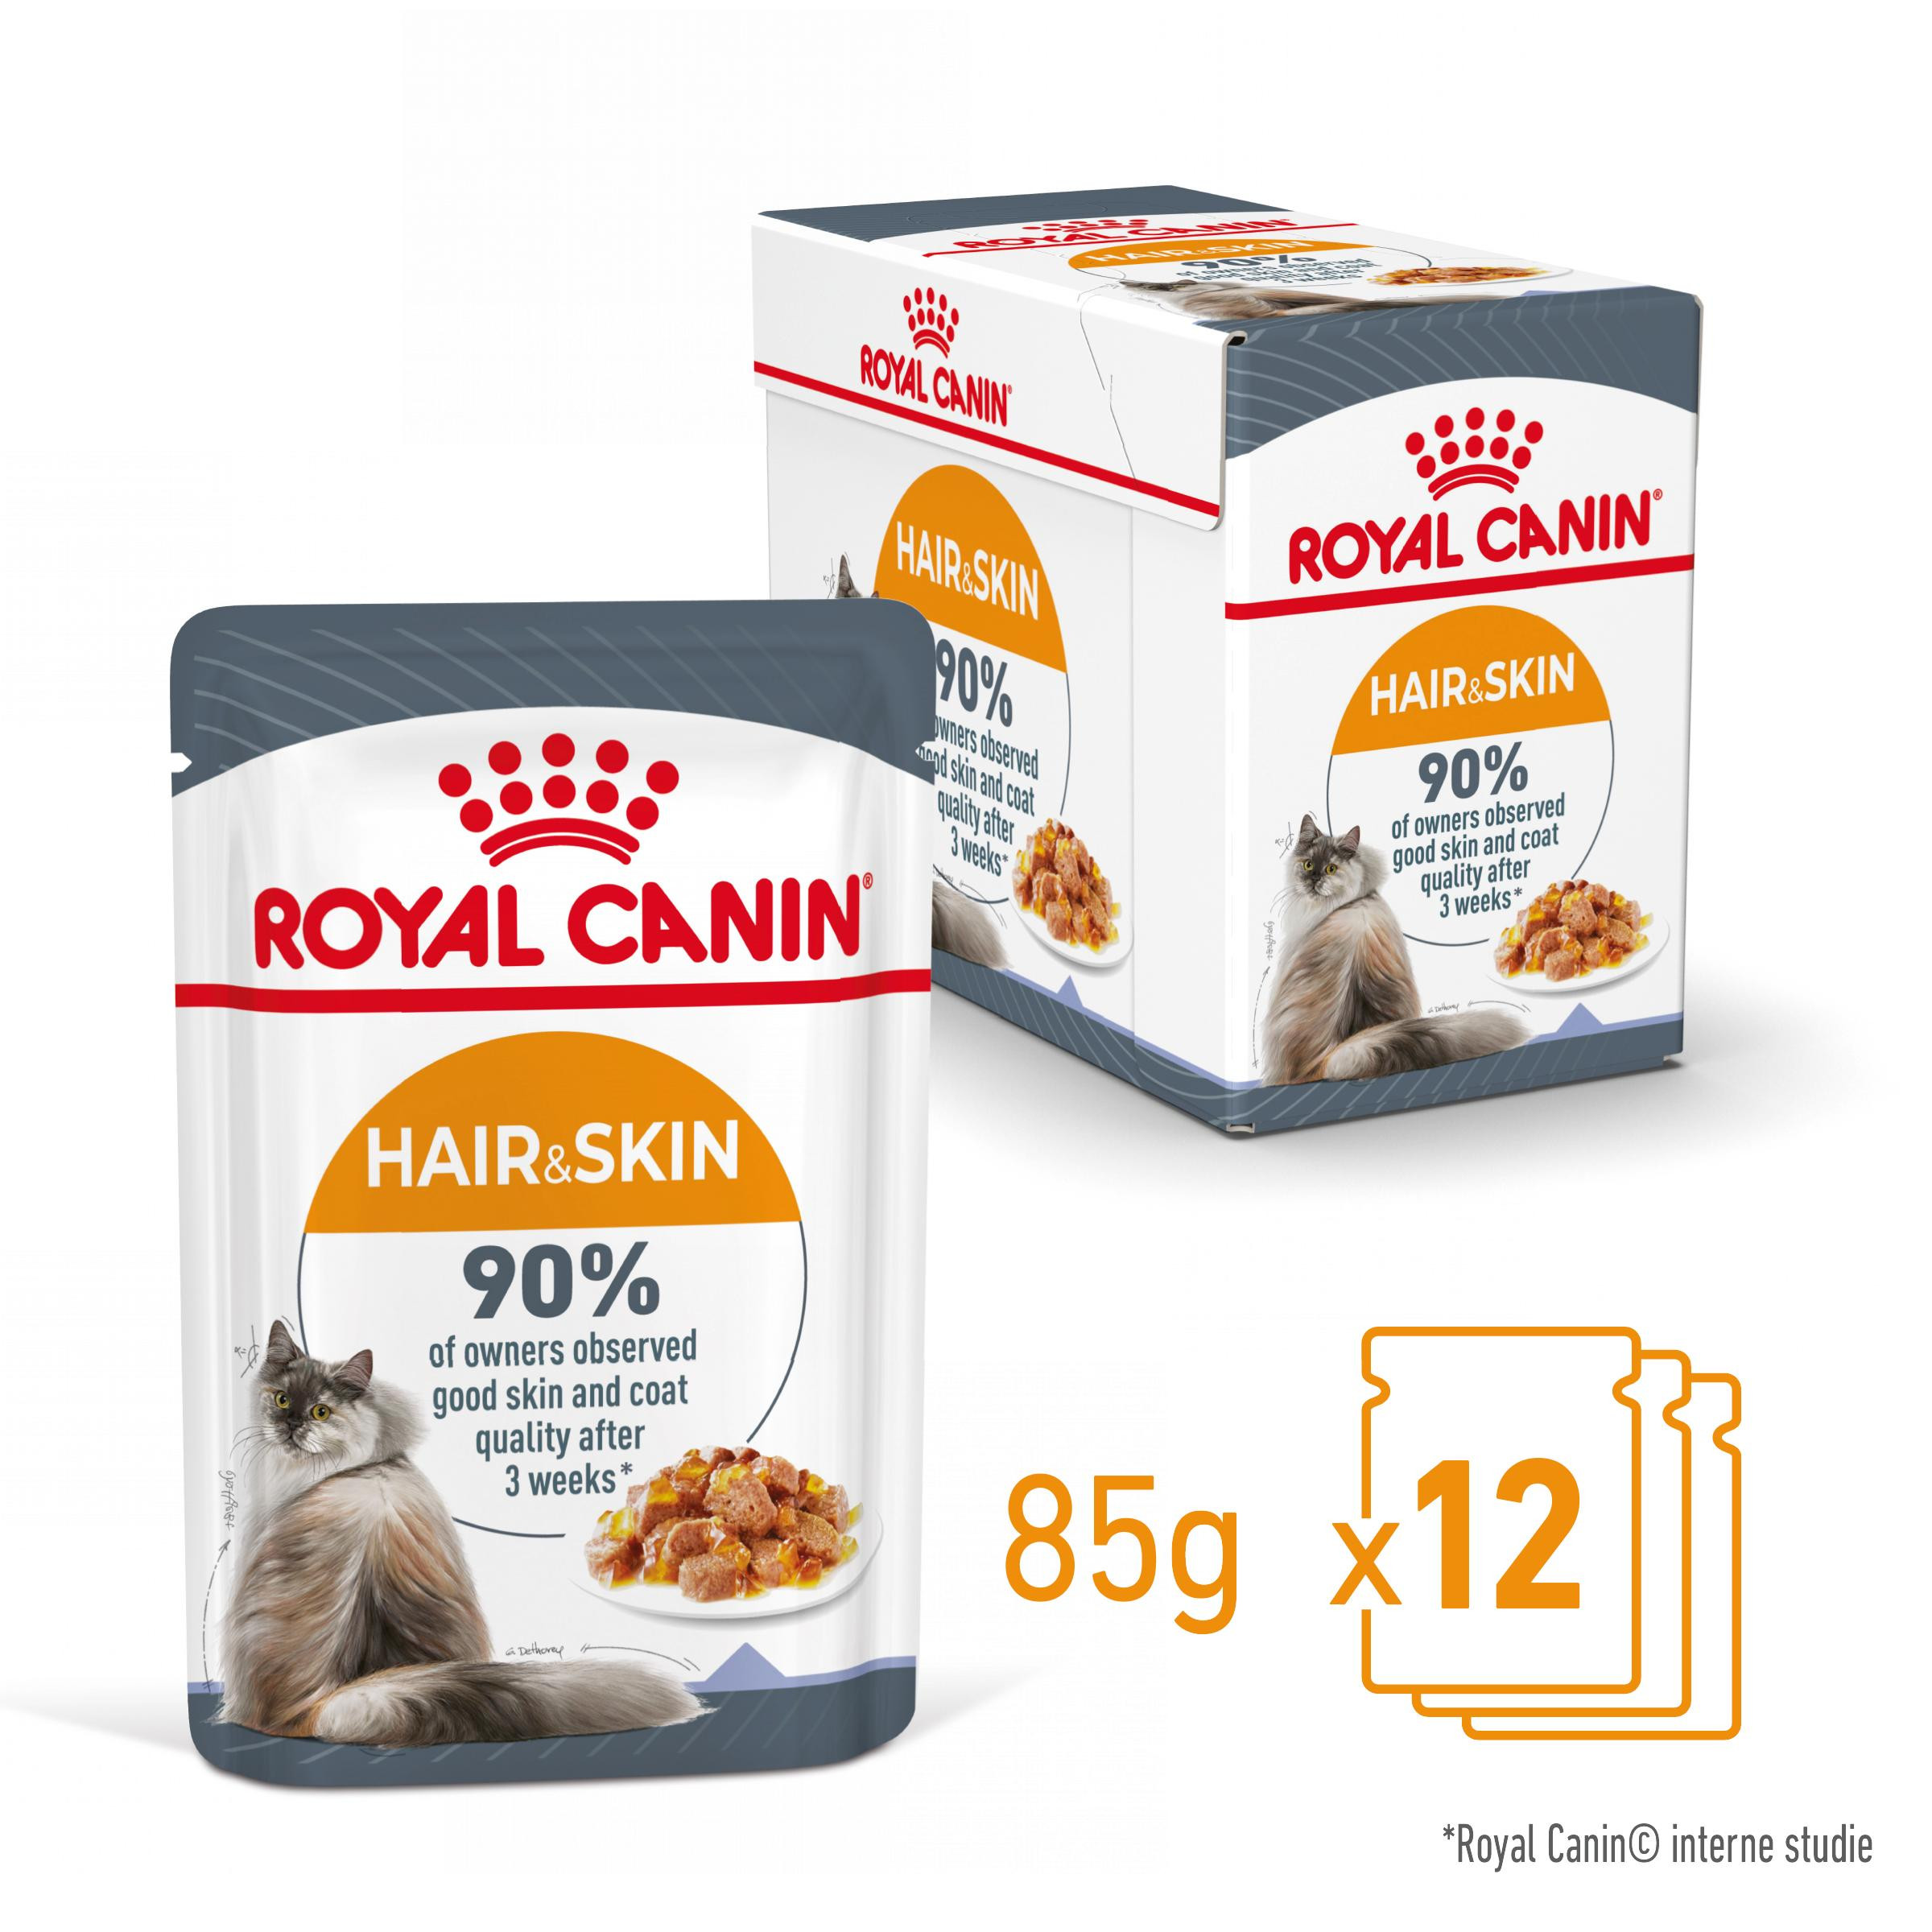 Royal Canin Hair & Skin Care in jelly natvoer kat (12x85 g)